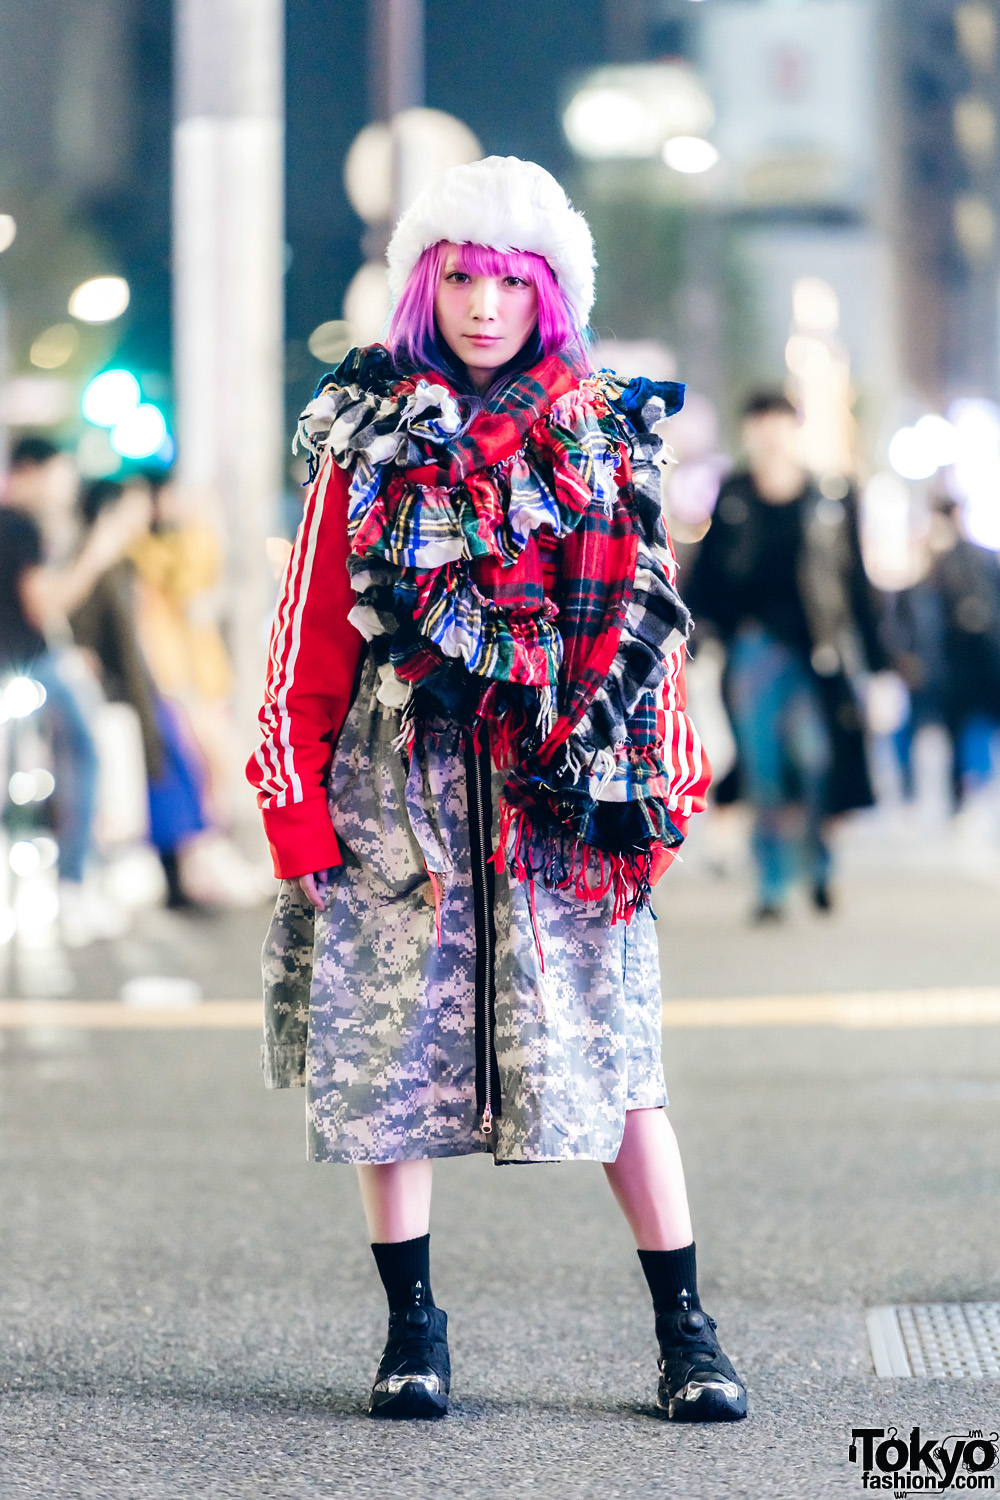 Pink-Haired Harajuku Girl in Mixed Prints w/ Nincompoop Capacity ...